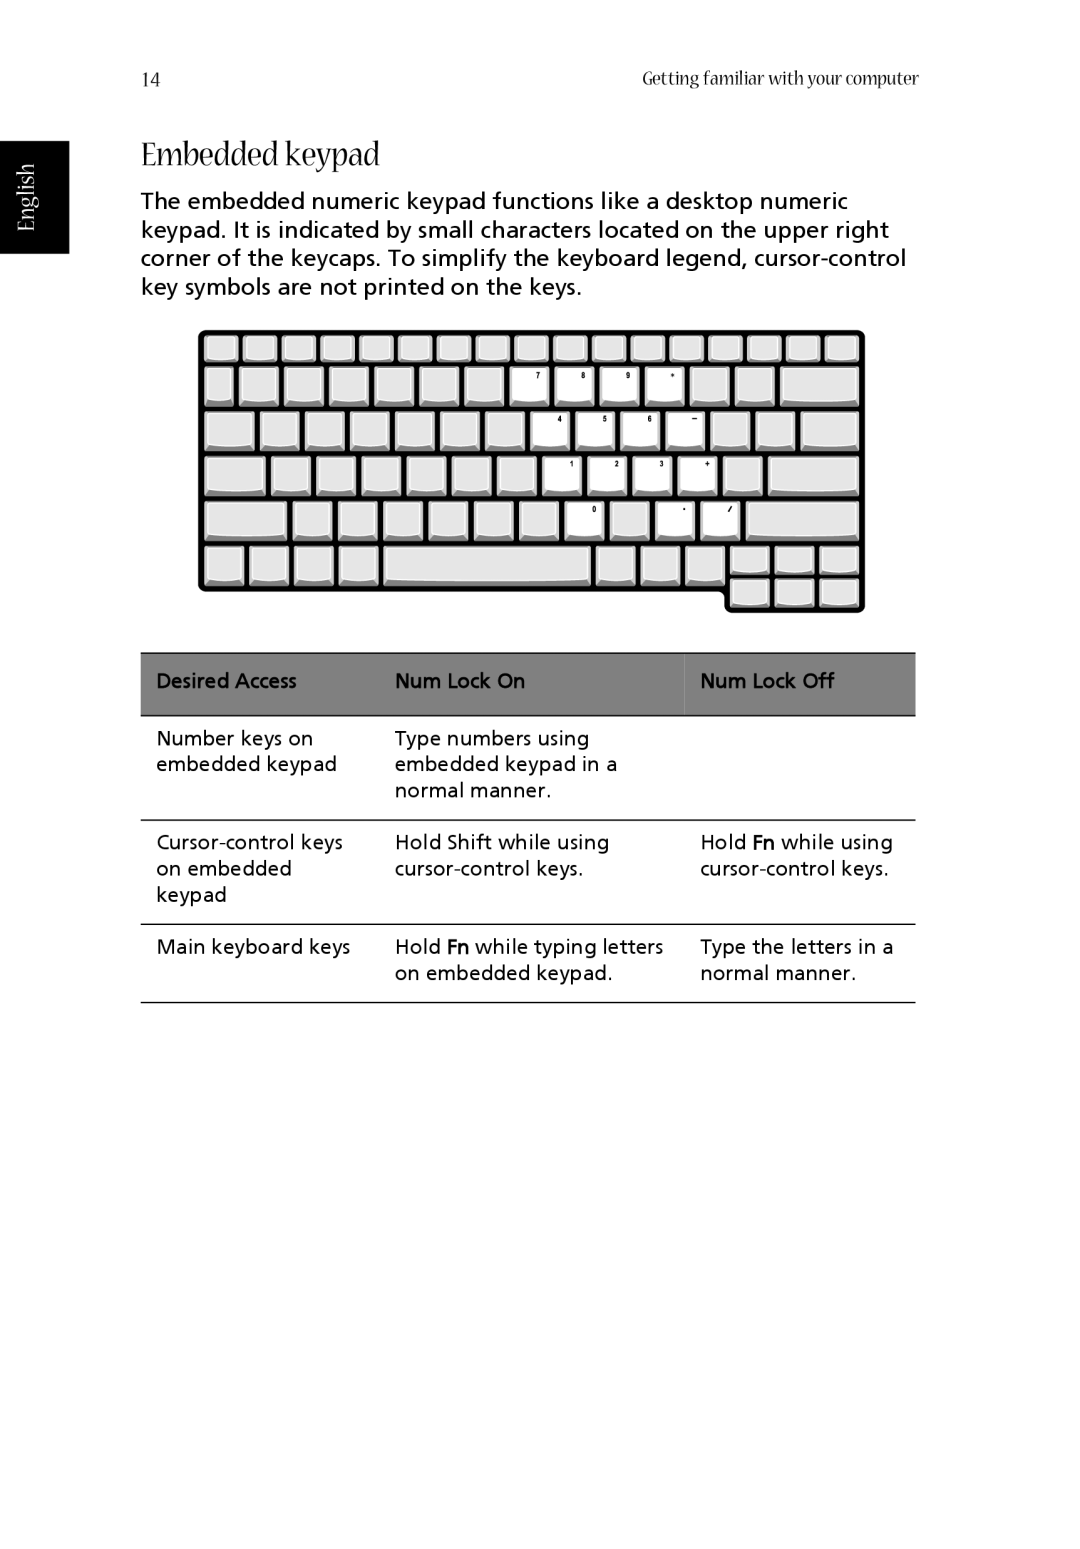 Acer 1360 manual Embedded keypad, English, Desired Access, Num Lock On, Num Lock Off 